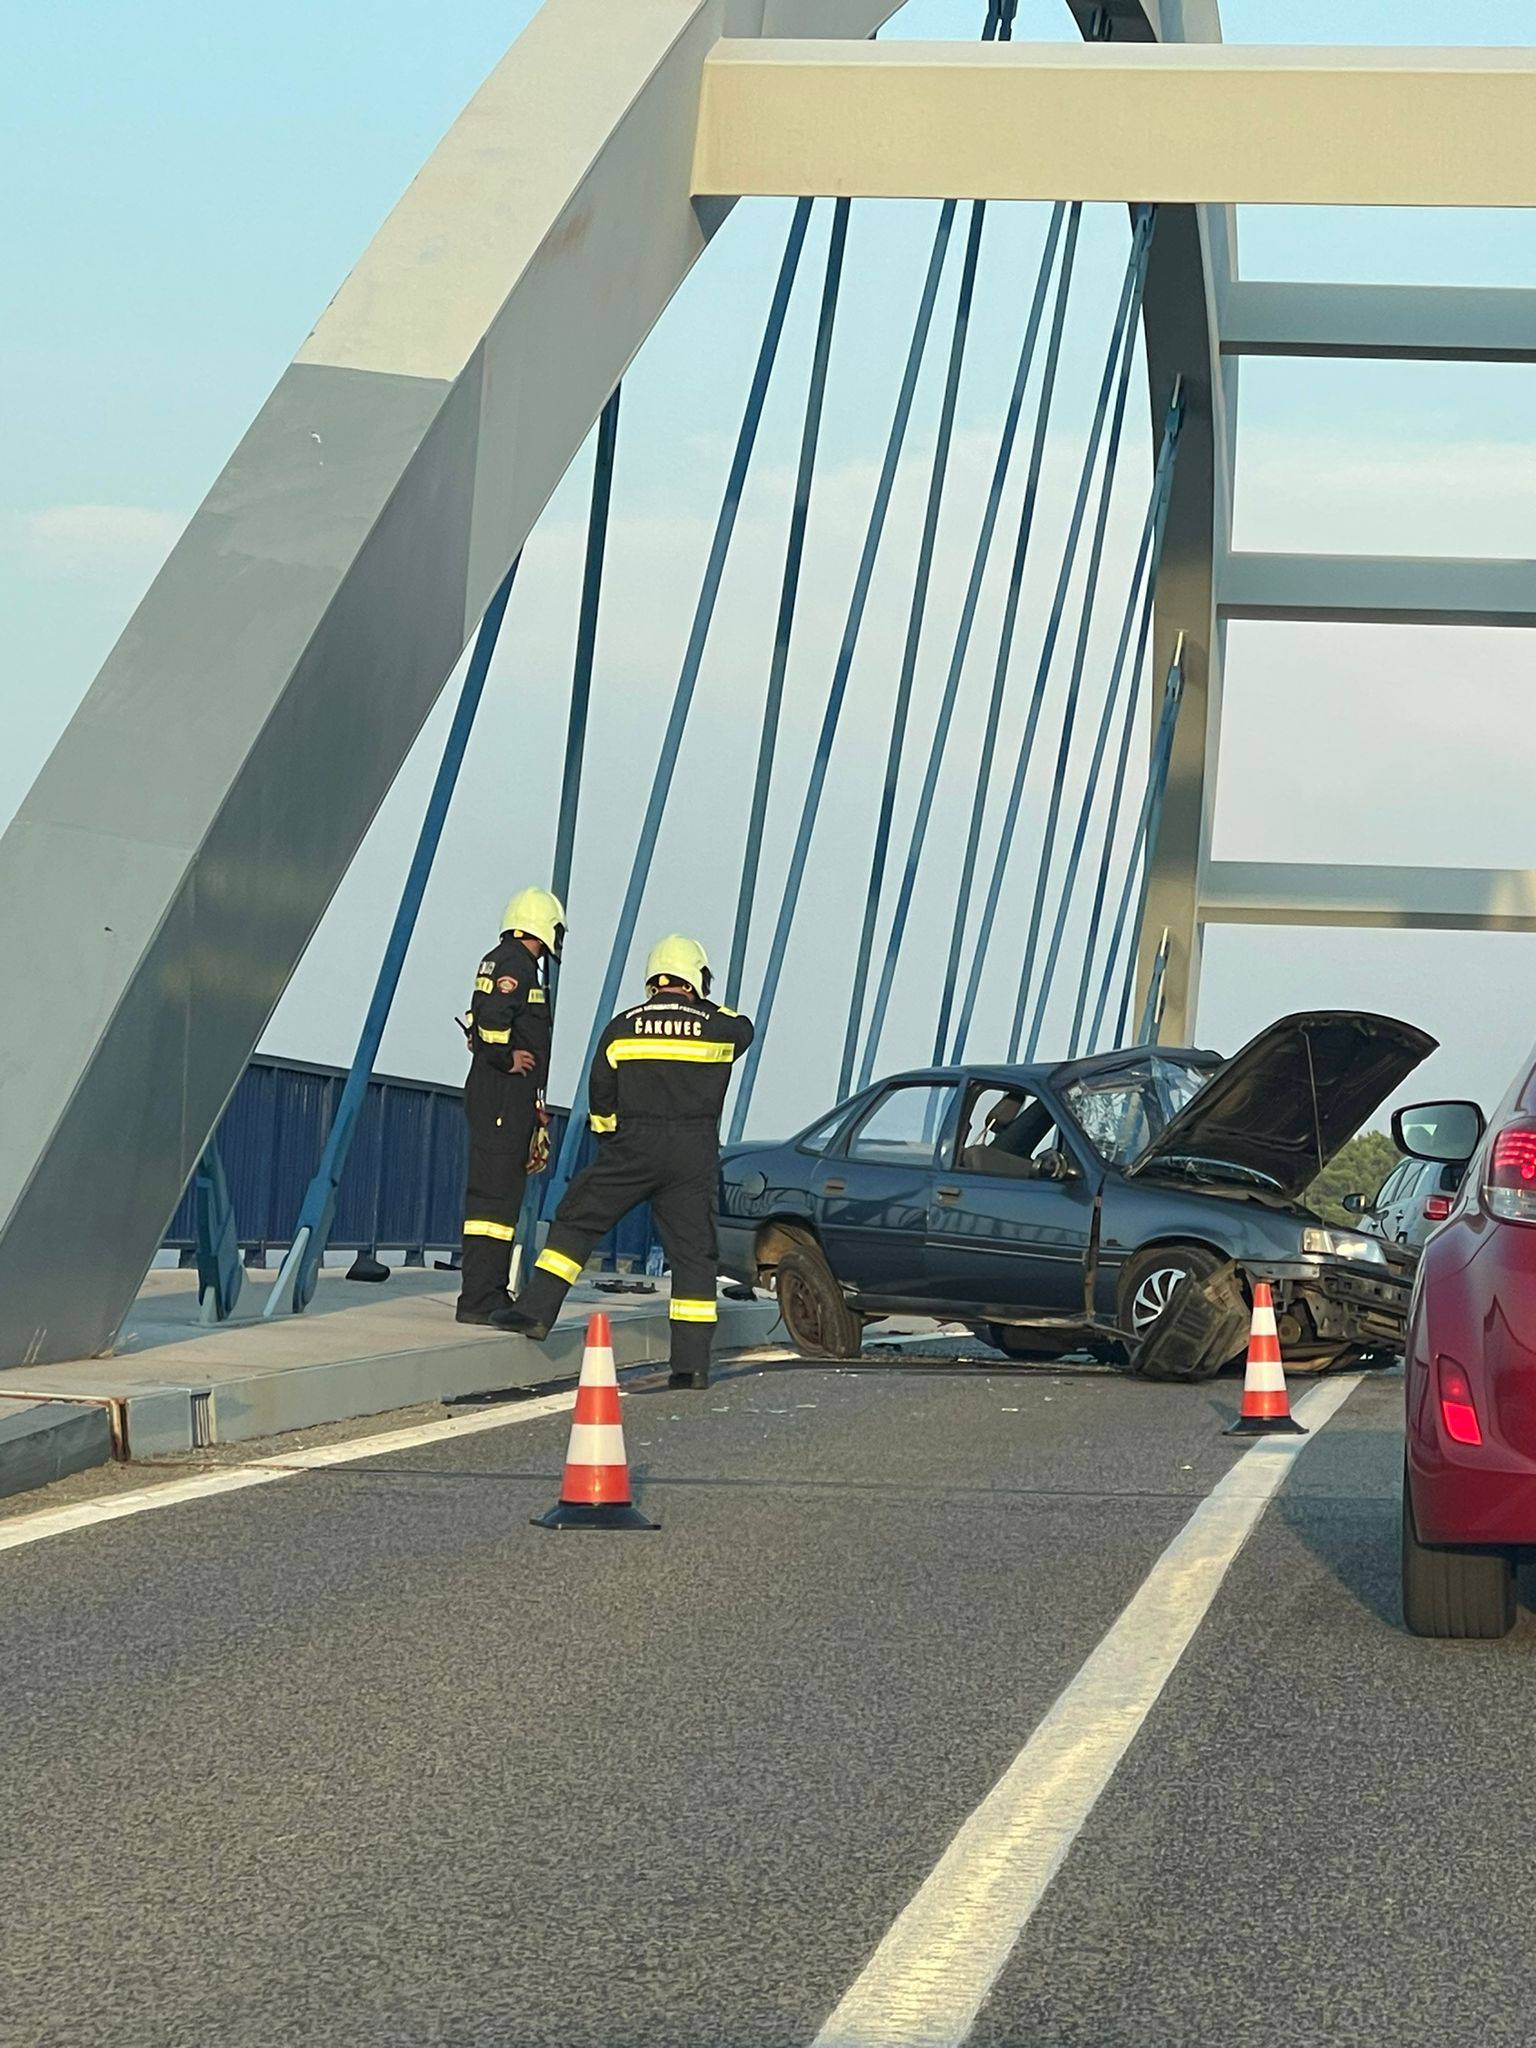 Dvoje ozlijeđenih u sudaru automobila na mostu Ždrelac